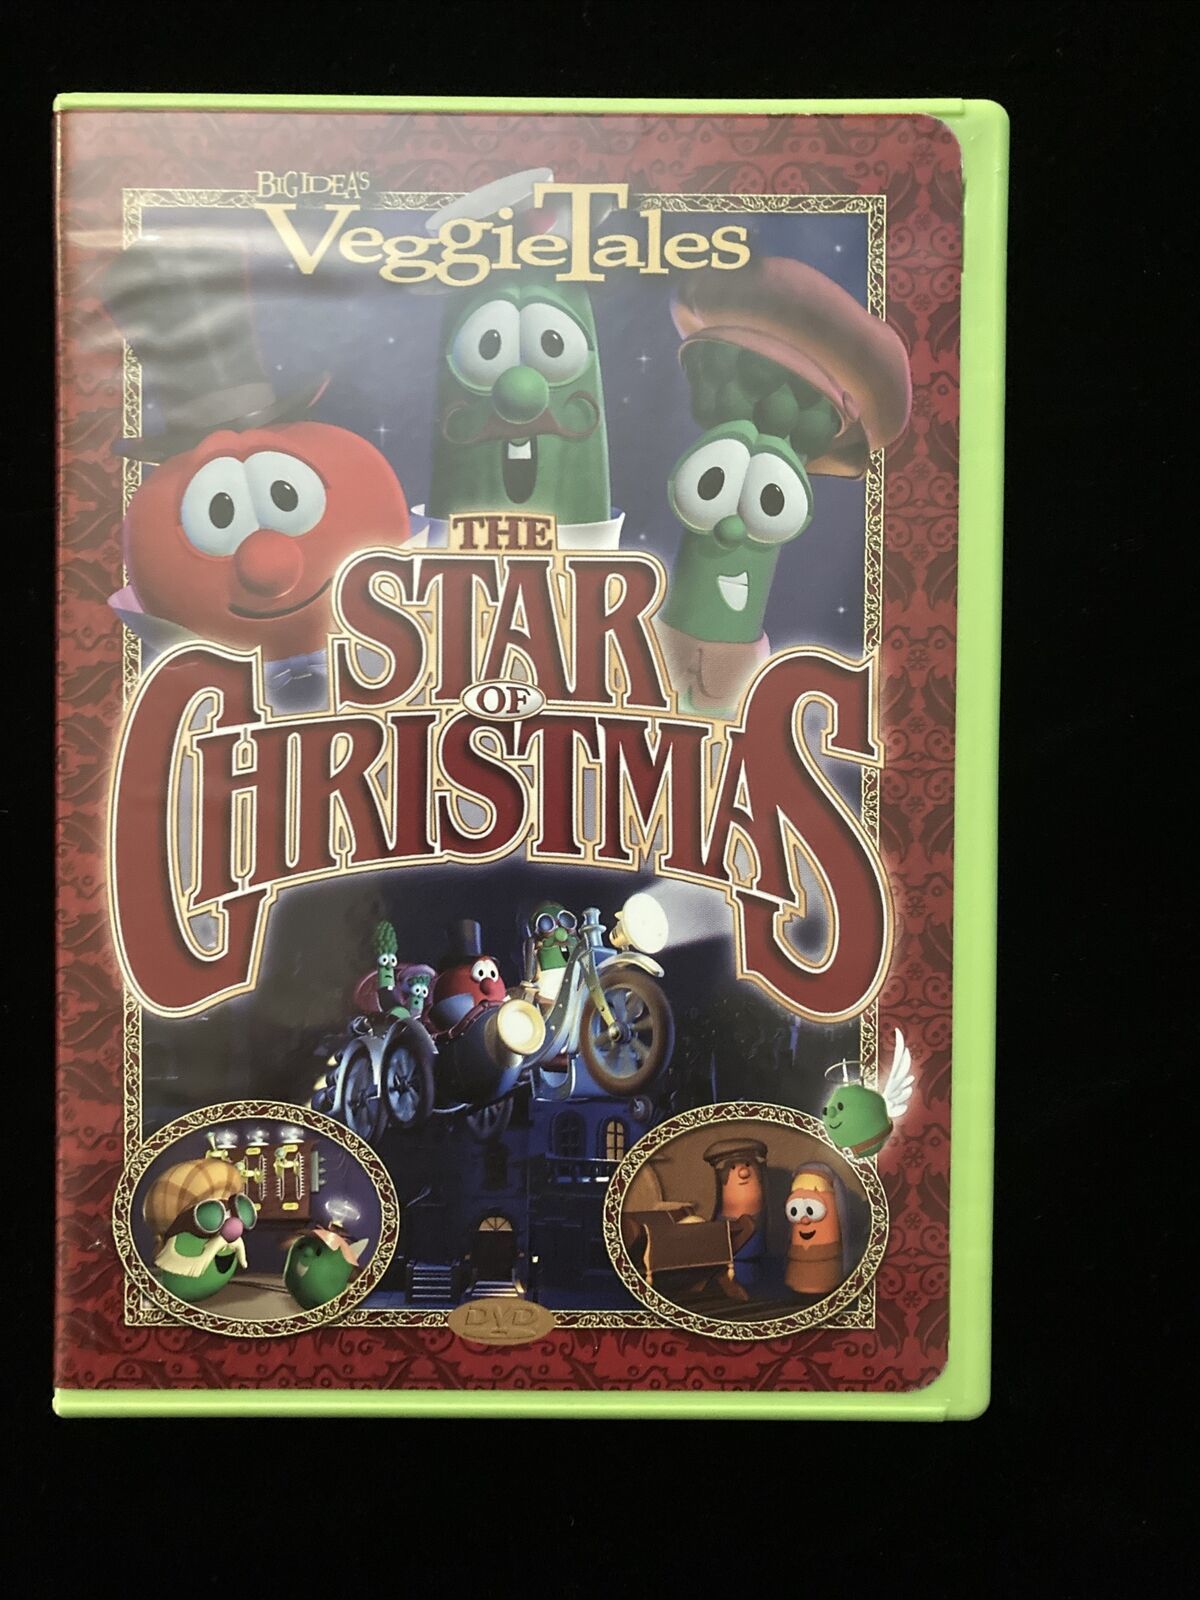 VeggieTales - The Star of Christmas (DVD, 2005) - DVDs & Blu-ray Discs